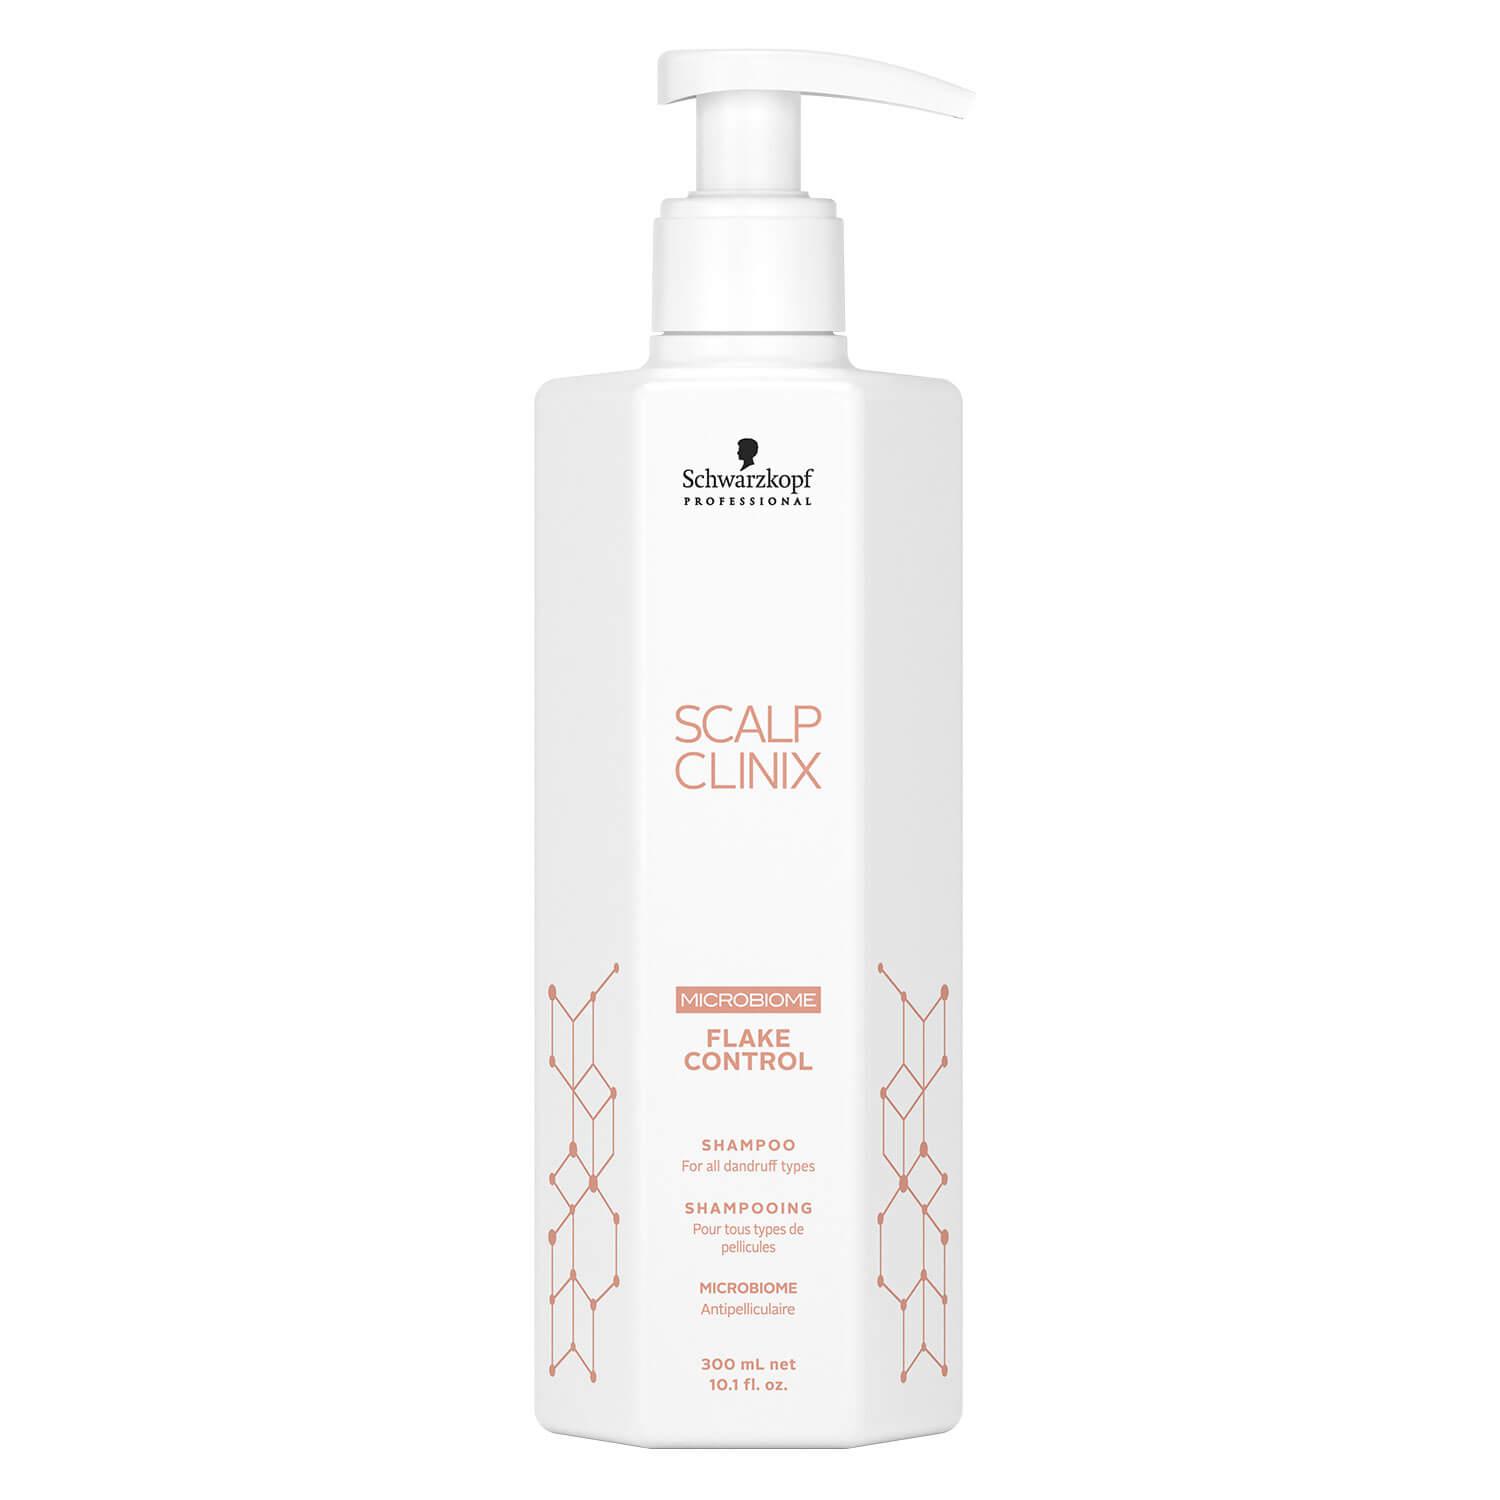 Scalp Clinix - Flake Control Shampoo